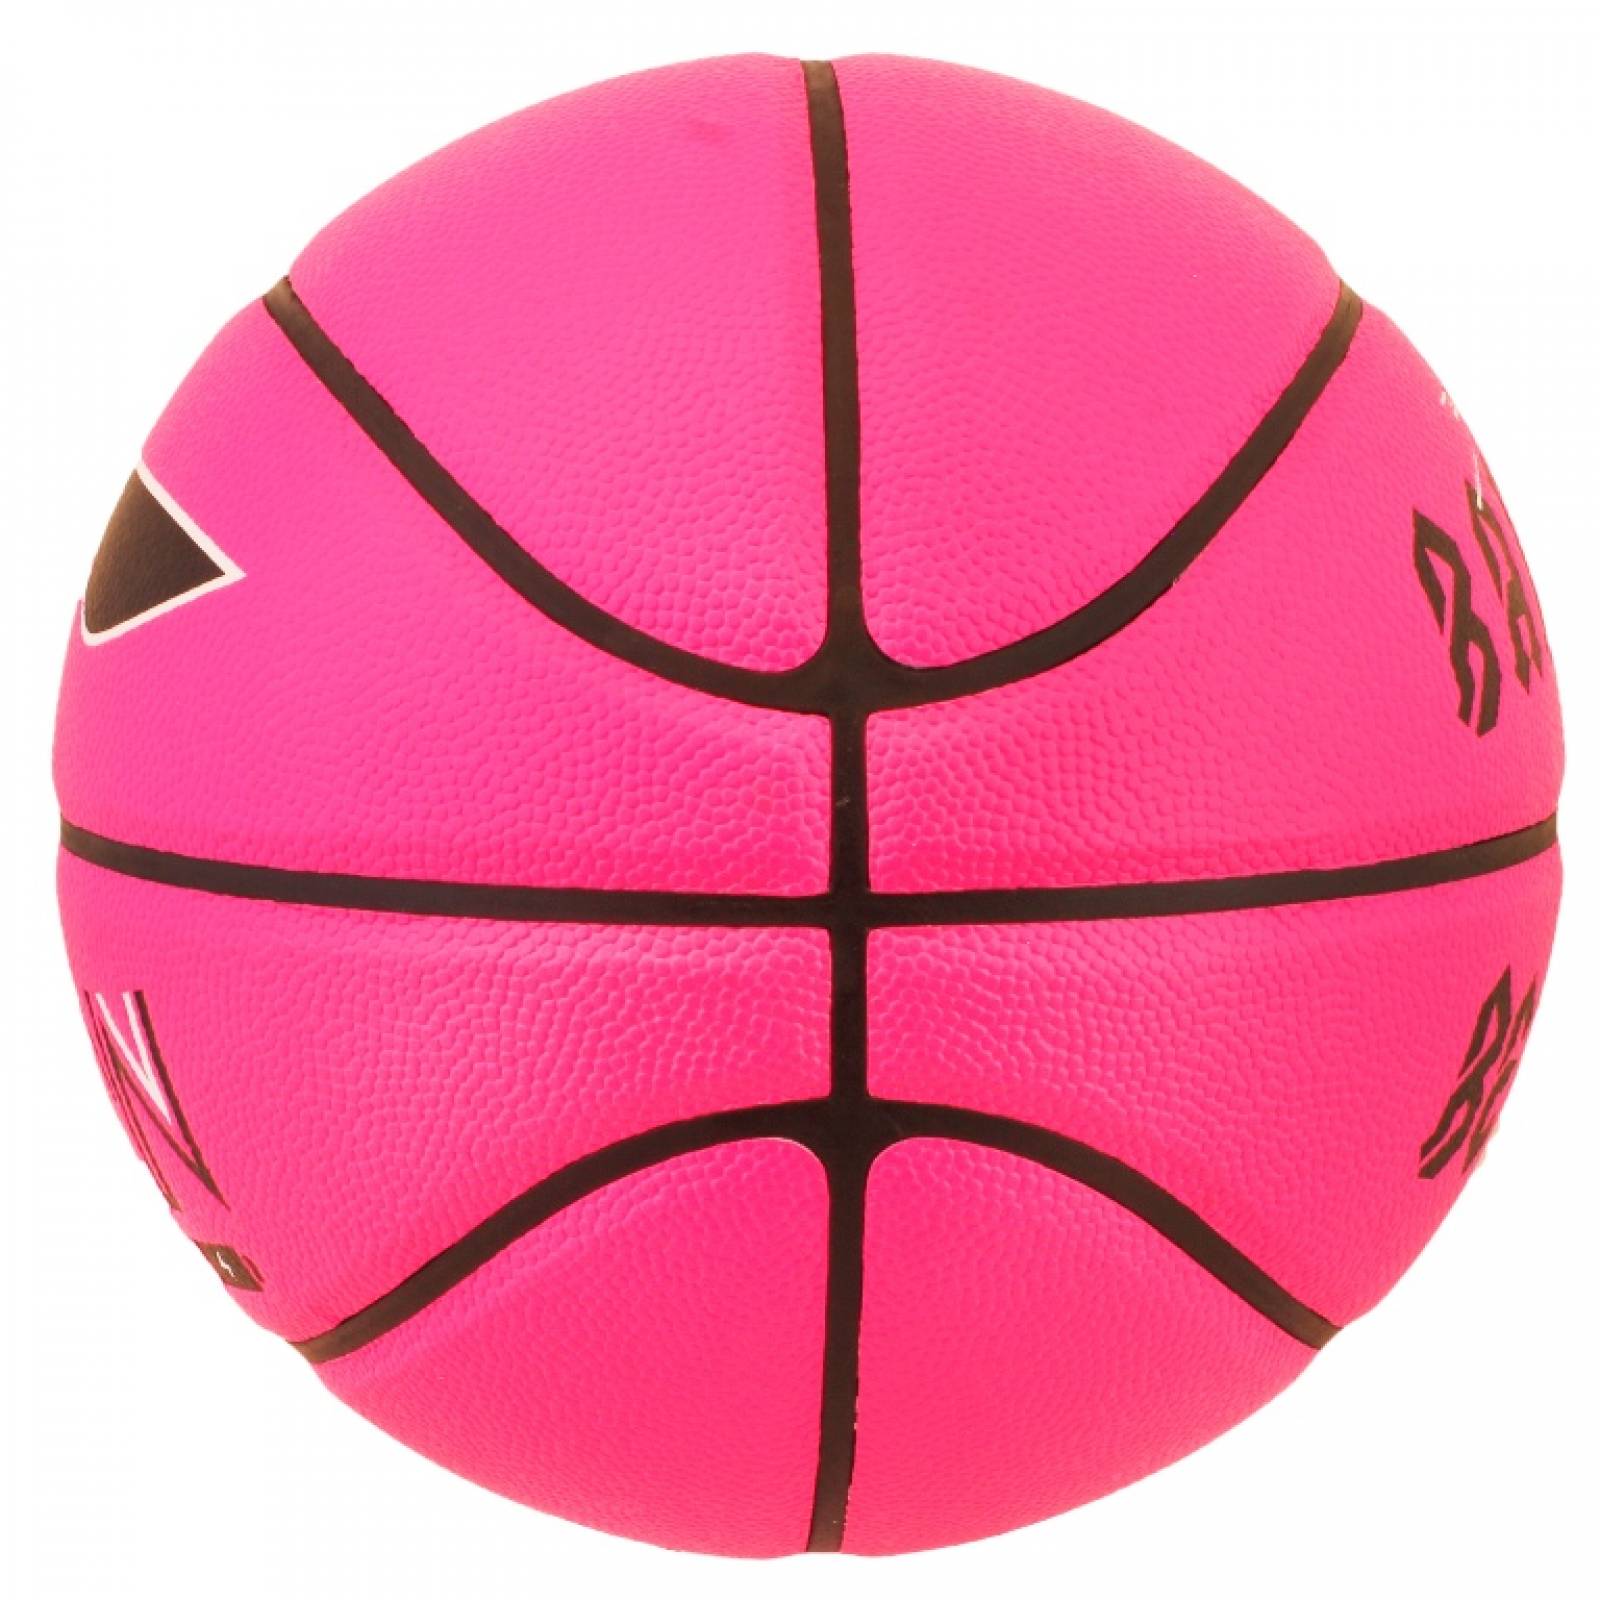 Balon de Basketball BADFIVE Li-Ning ABQN184-1 color Verde Unisex